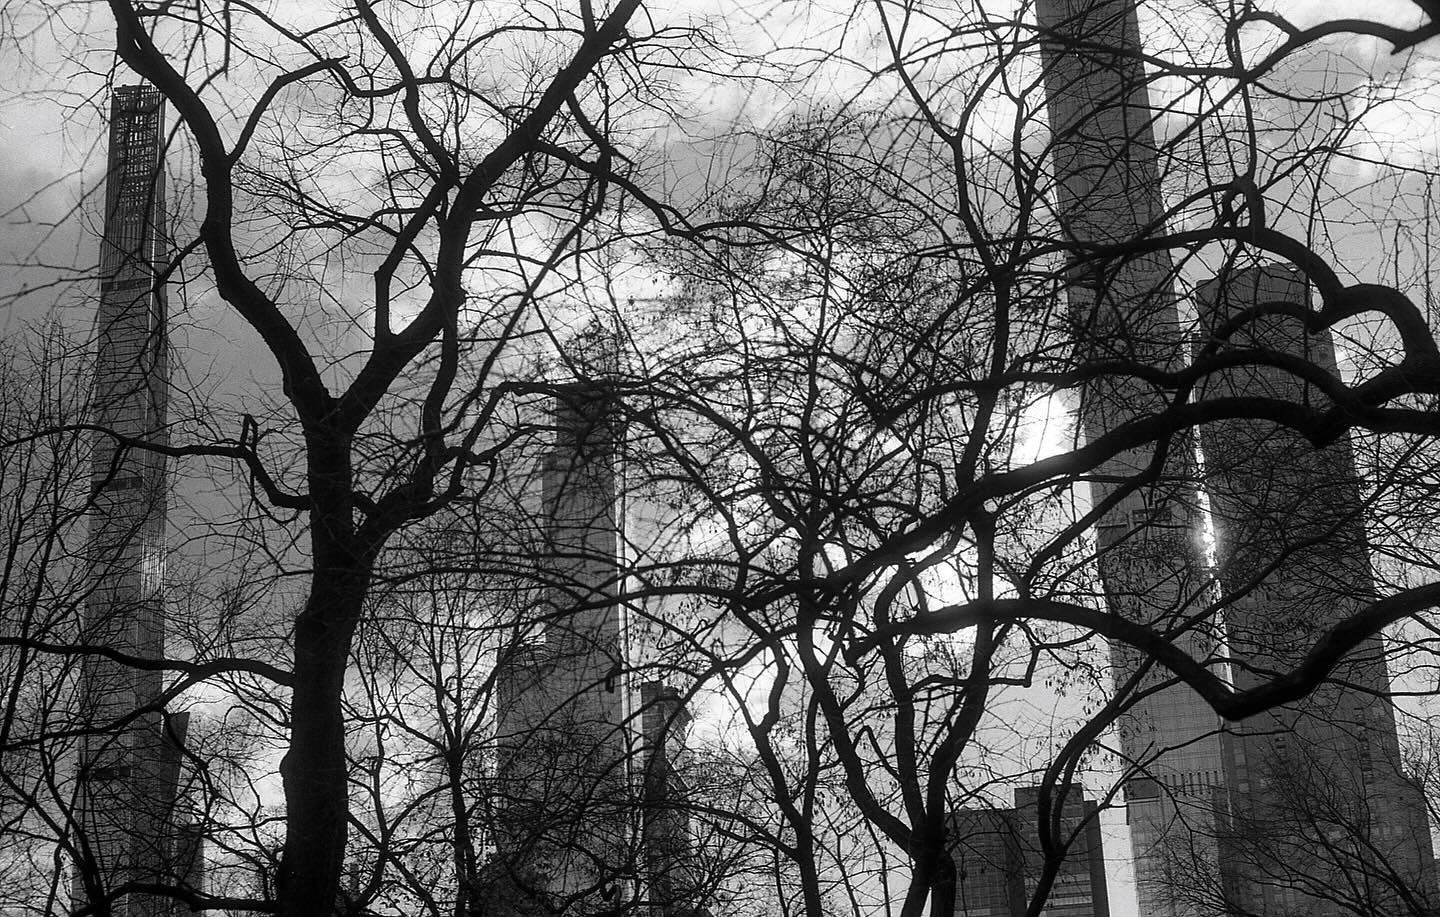 2024.01 // Central Park, USA
.
.
.
.
.
#film #filmphotography #analog #analogphotography #analogpeople #analogvibes #minolta #minoltagang #35mm #35mmphotography #latergram